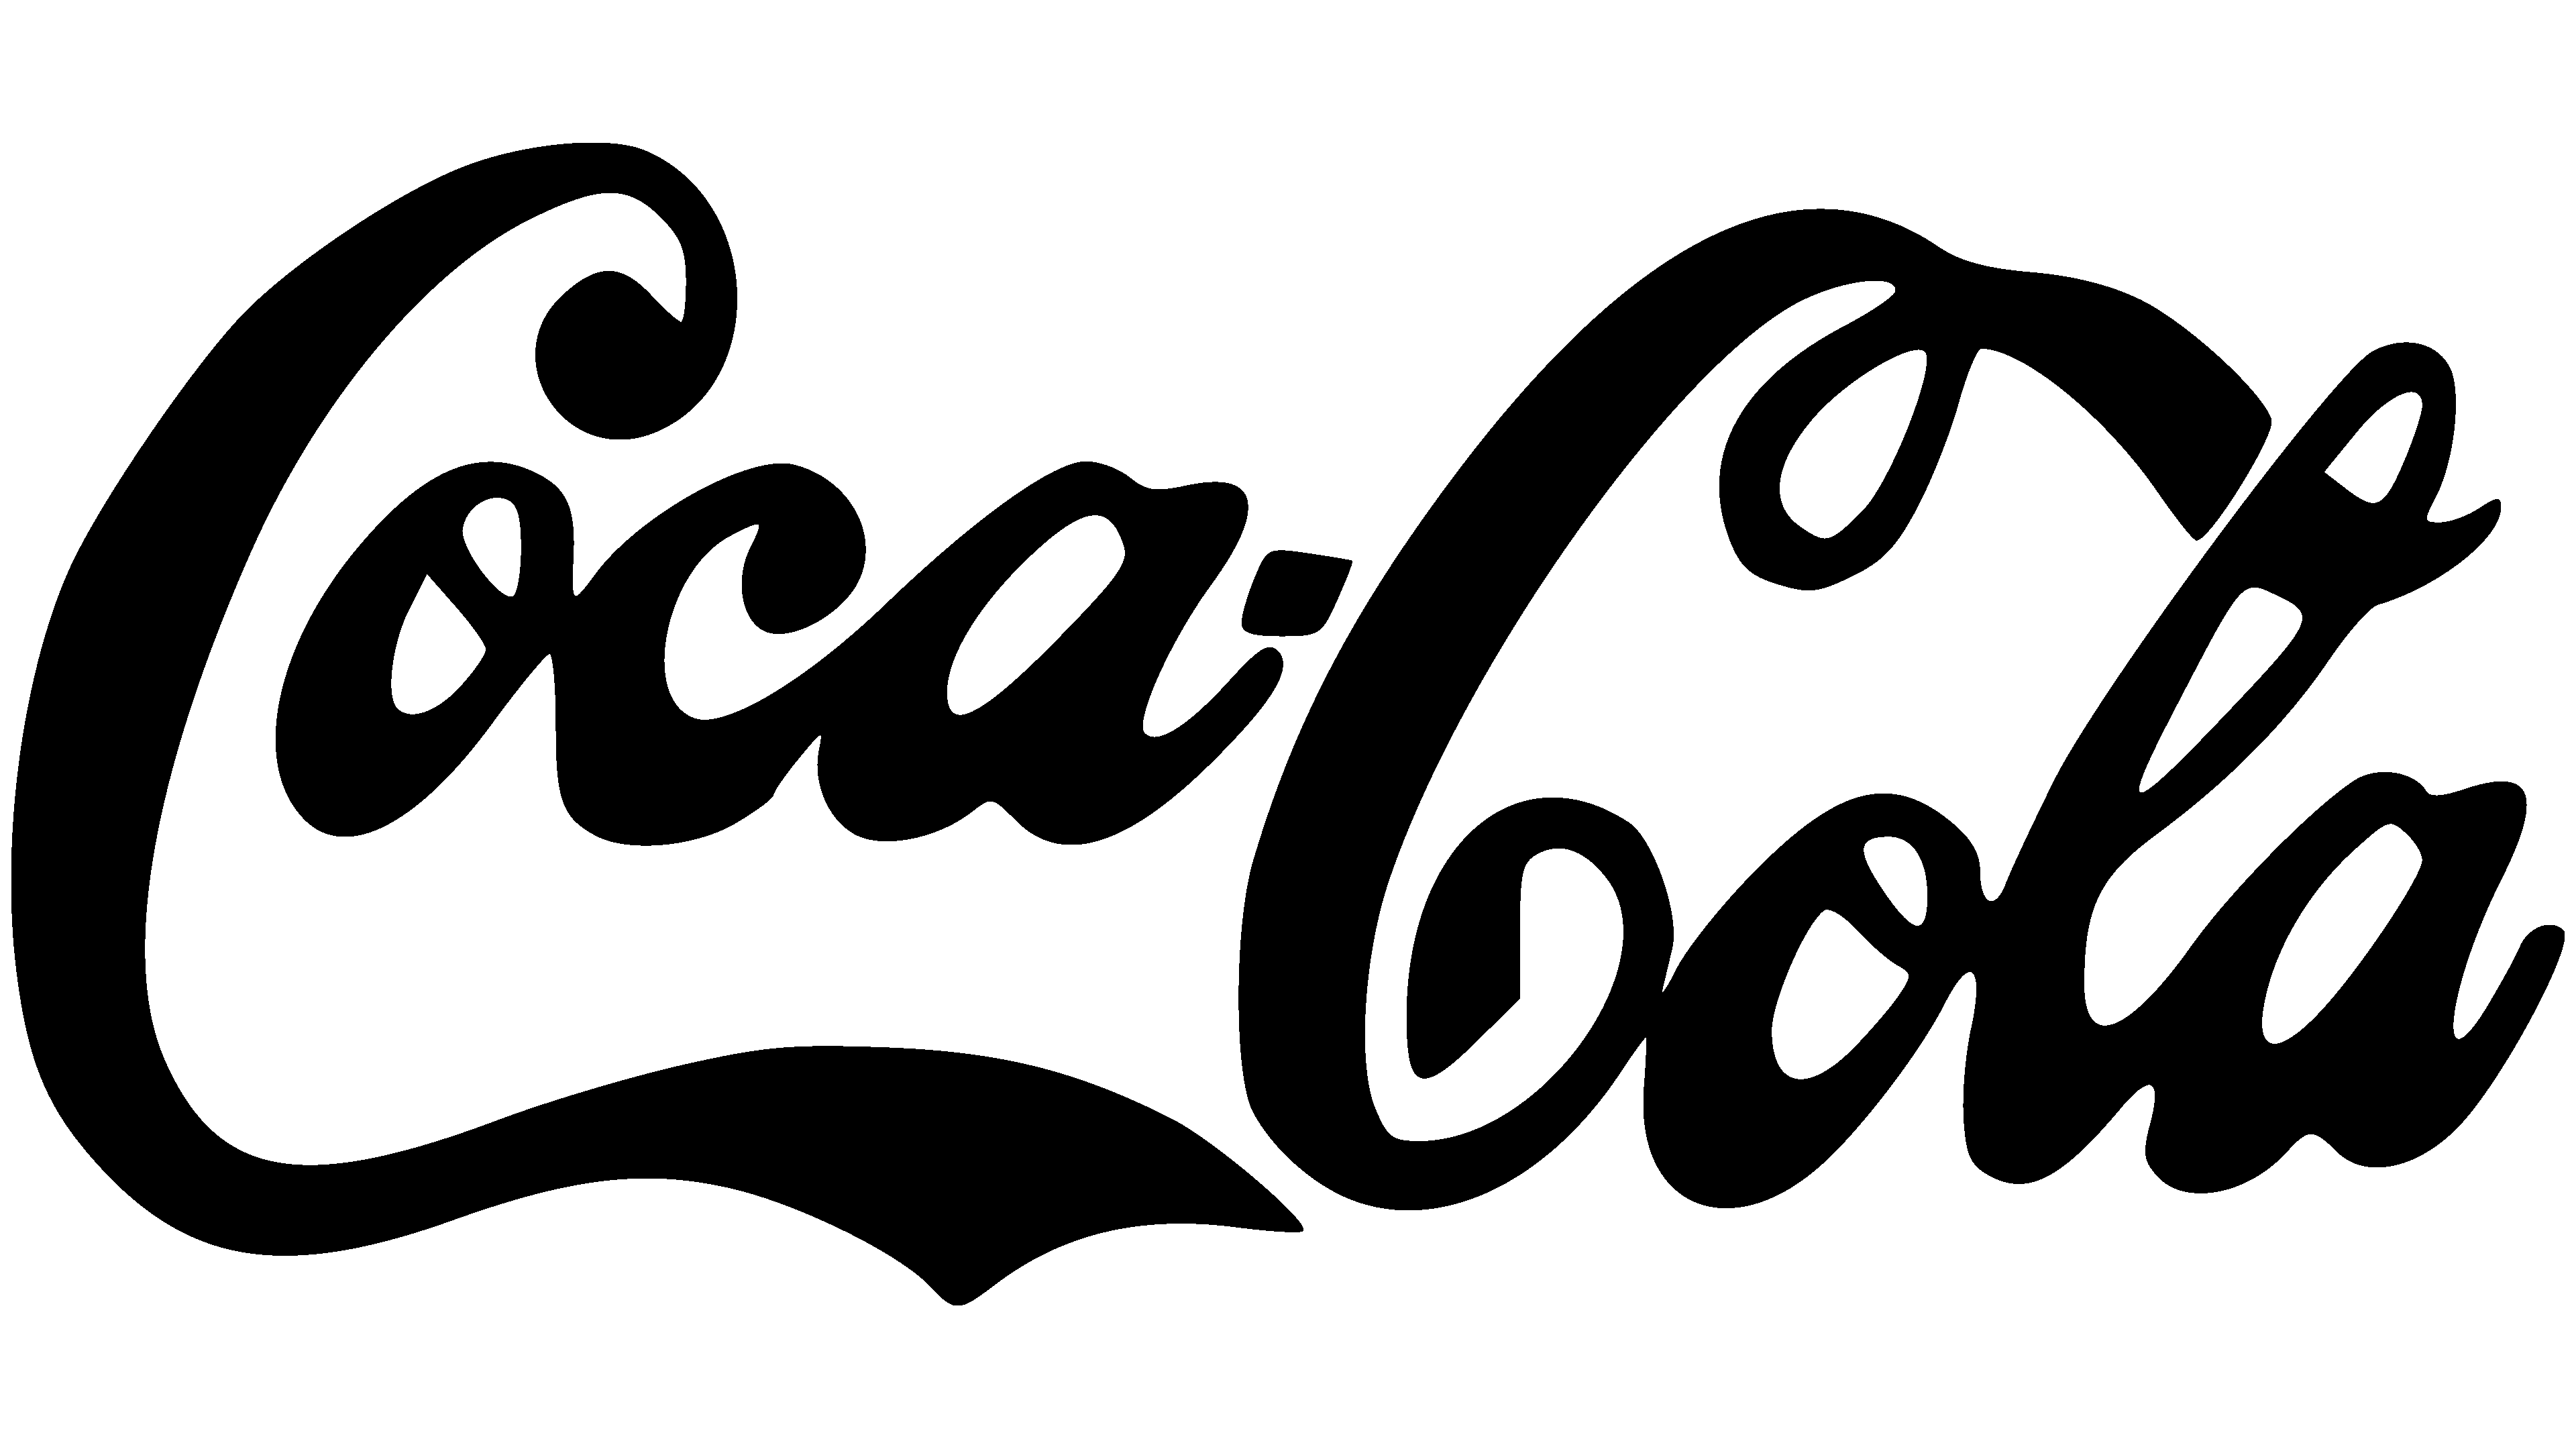 Coca-Cola(29) logo, Vector Logo of Coca-Cola(29) brand free download (eps,  ai, png, cdr) formats